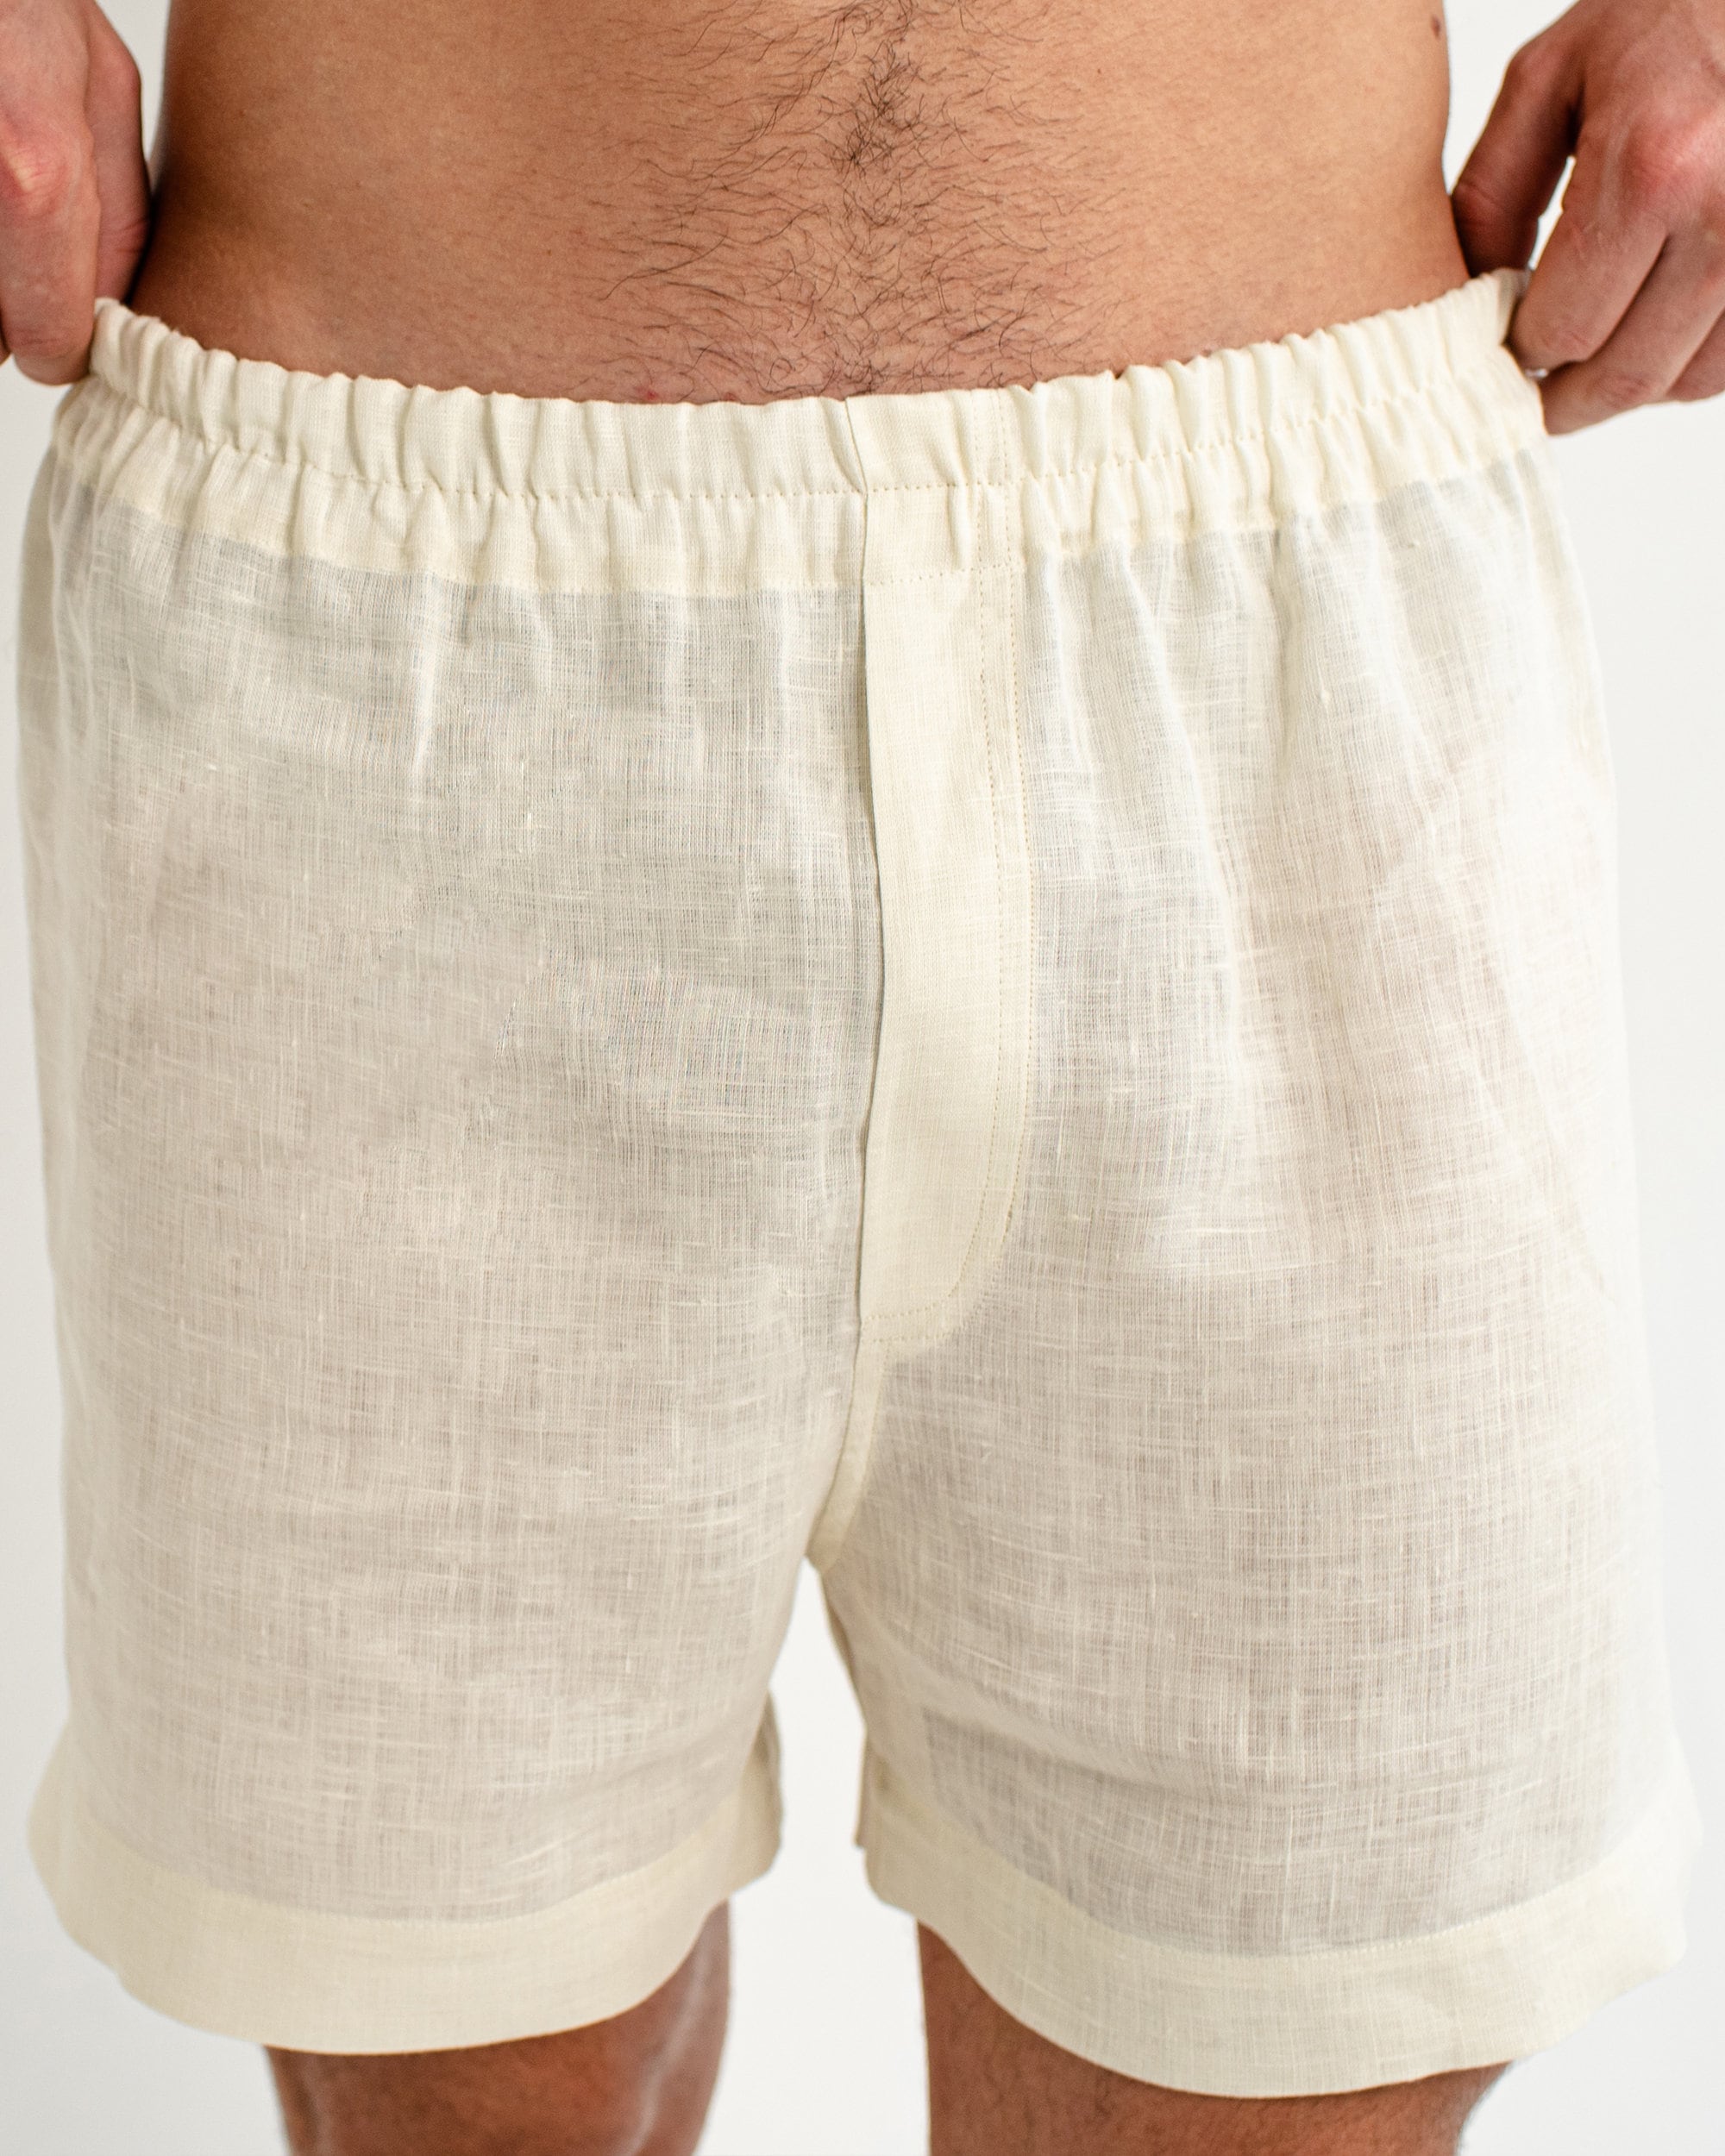 Men's Boxers Linen Sleep Shorts White Underpants for Men Organic